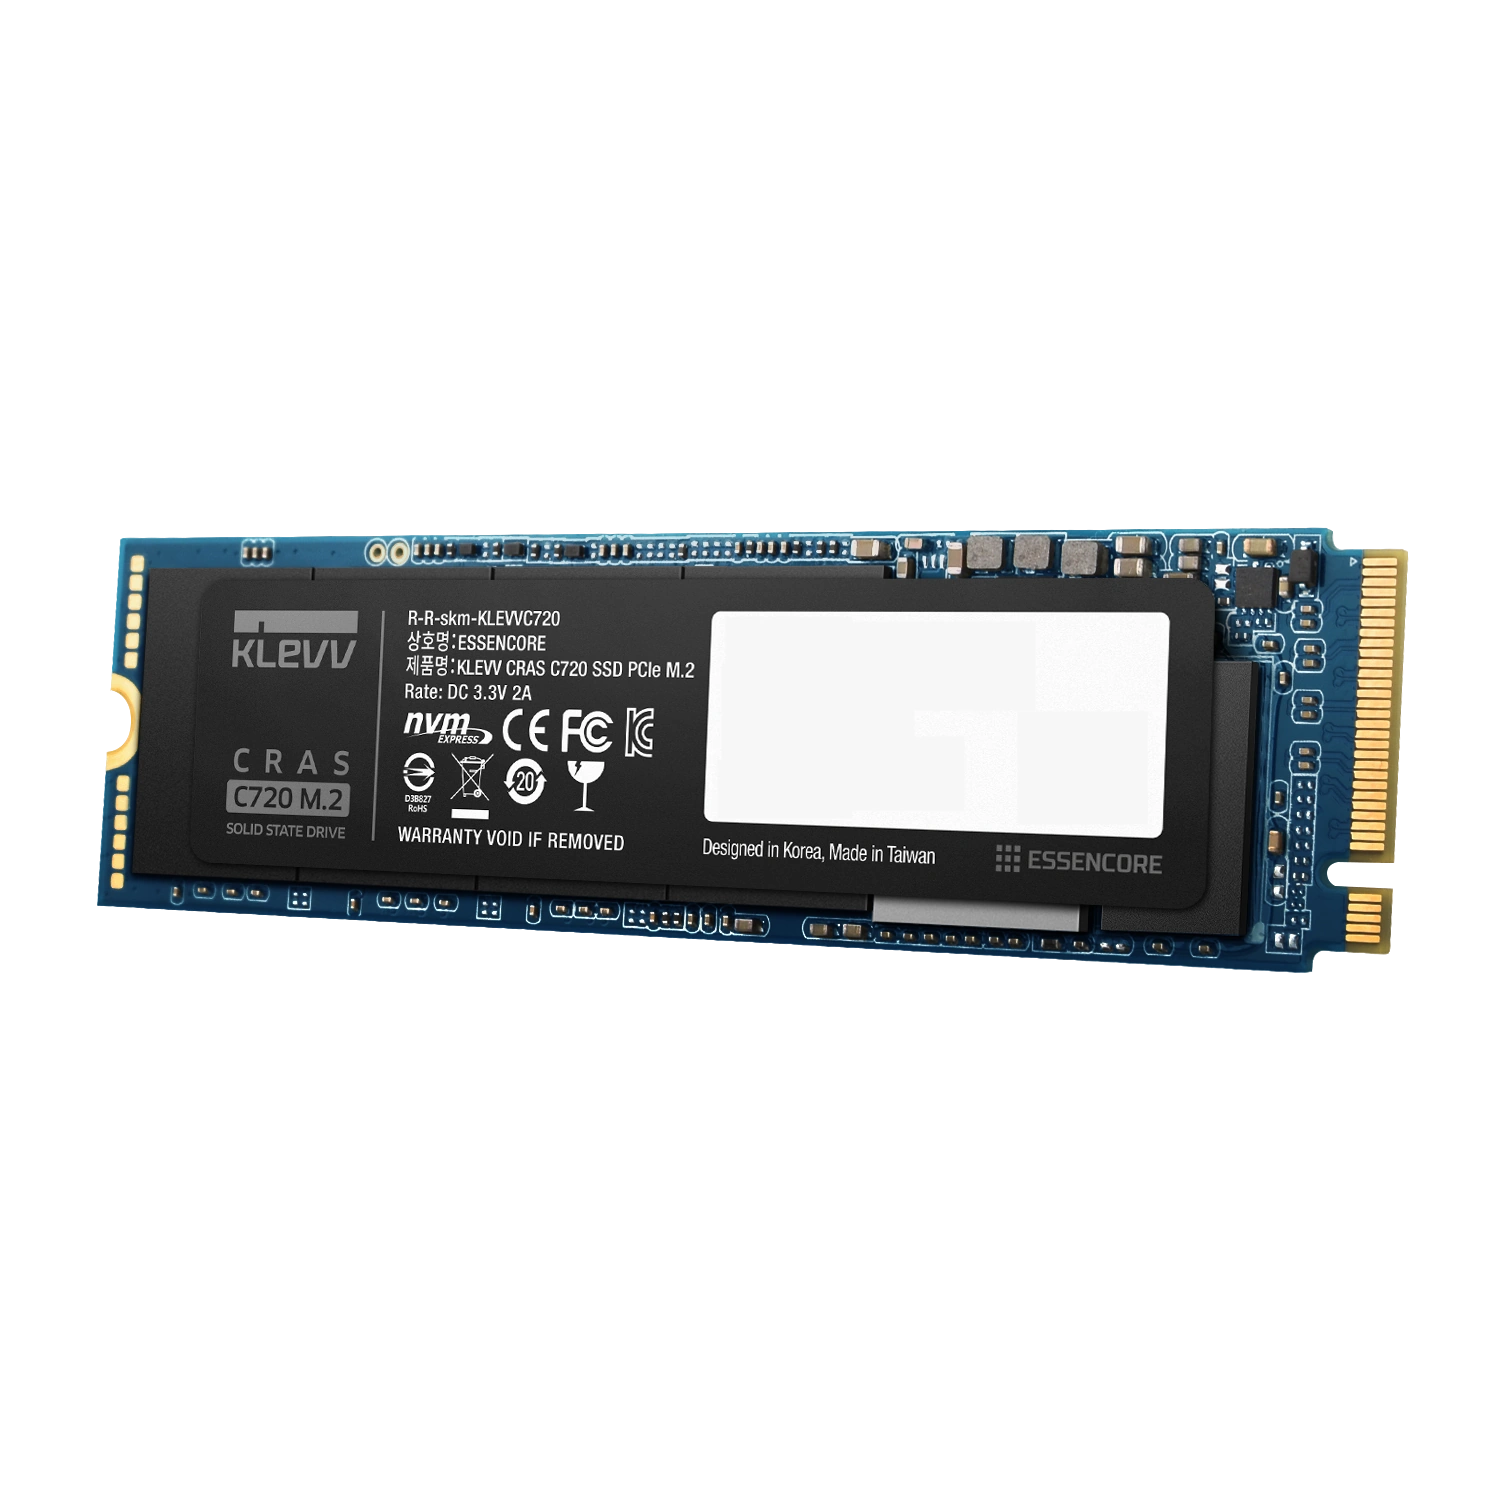 Klevv Cras C720 PCIe Gen3 NVMe M.2 SSD